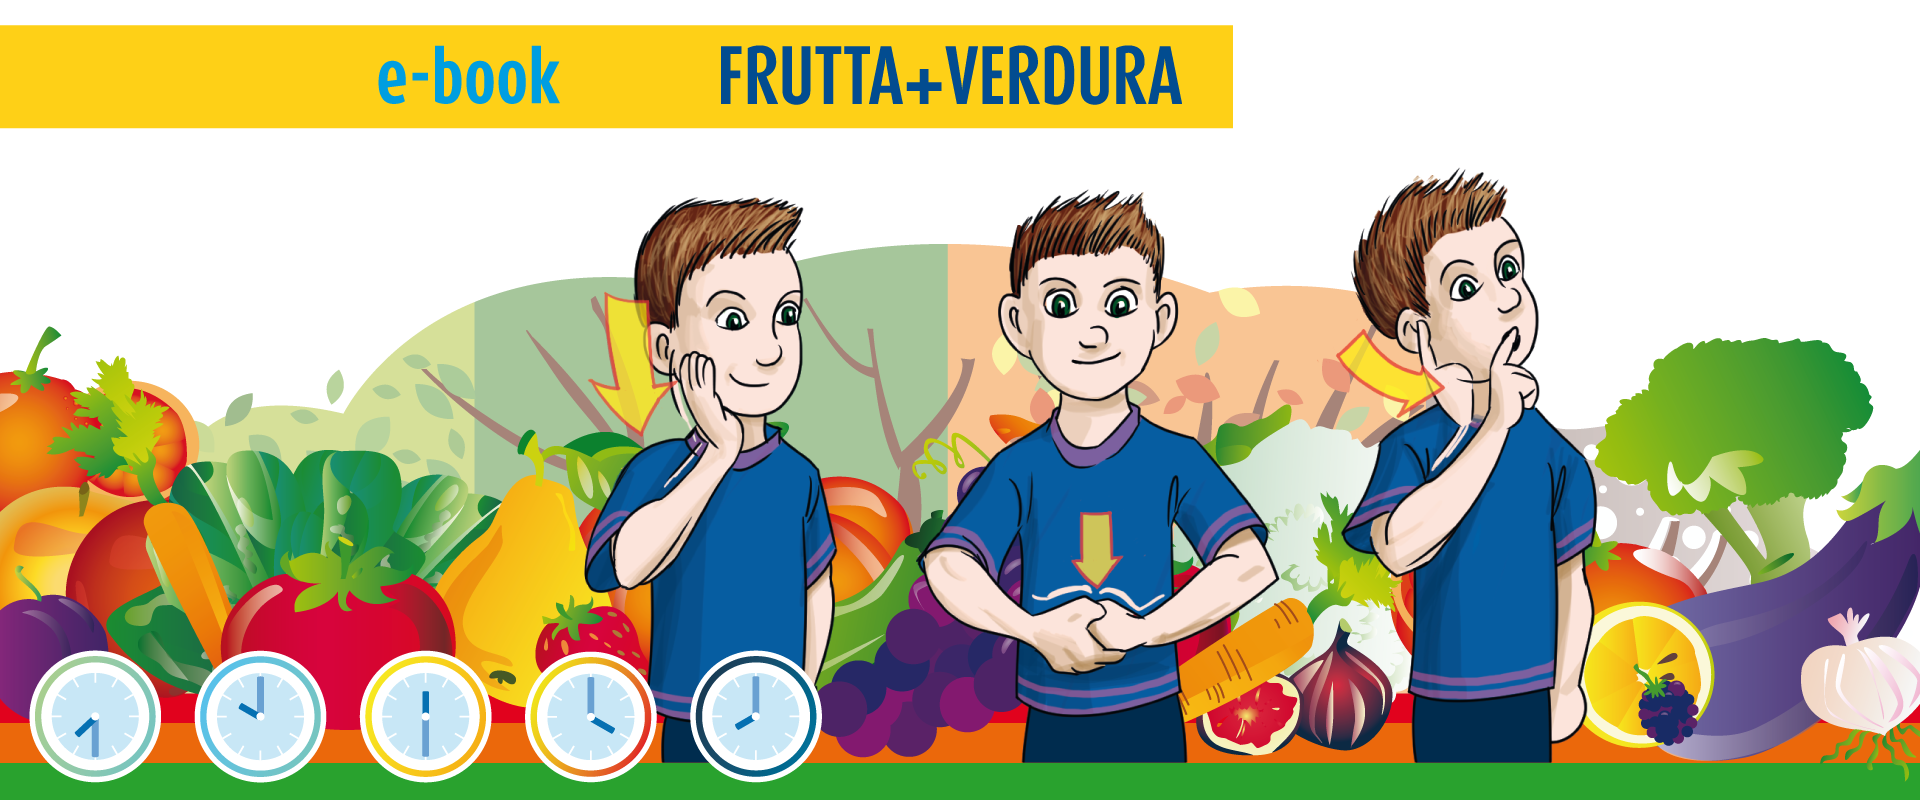 Frutta+Verdura